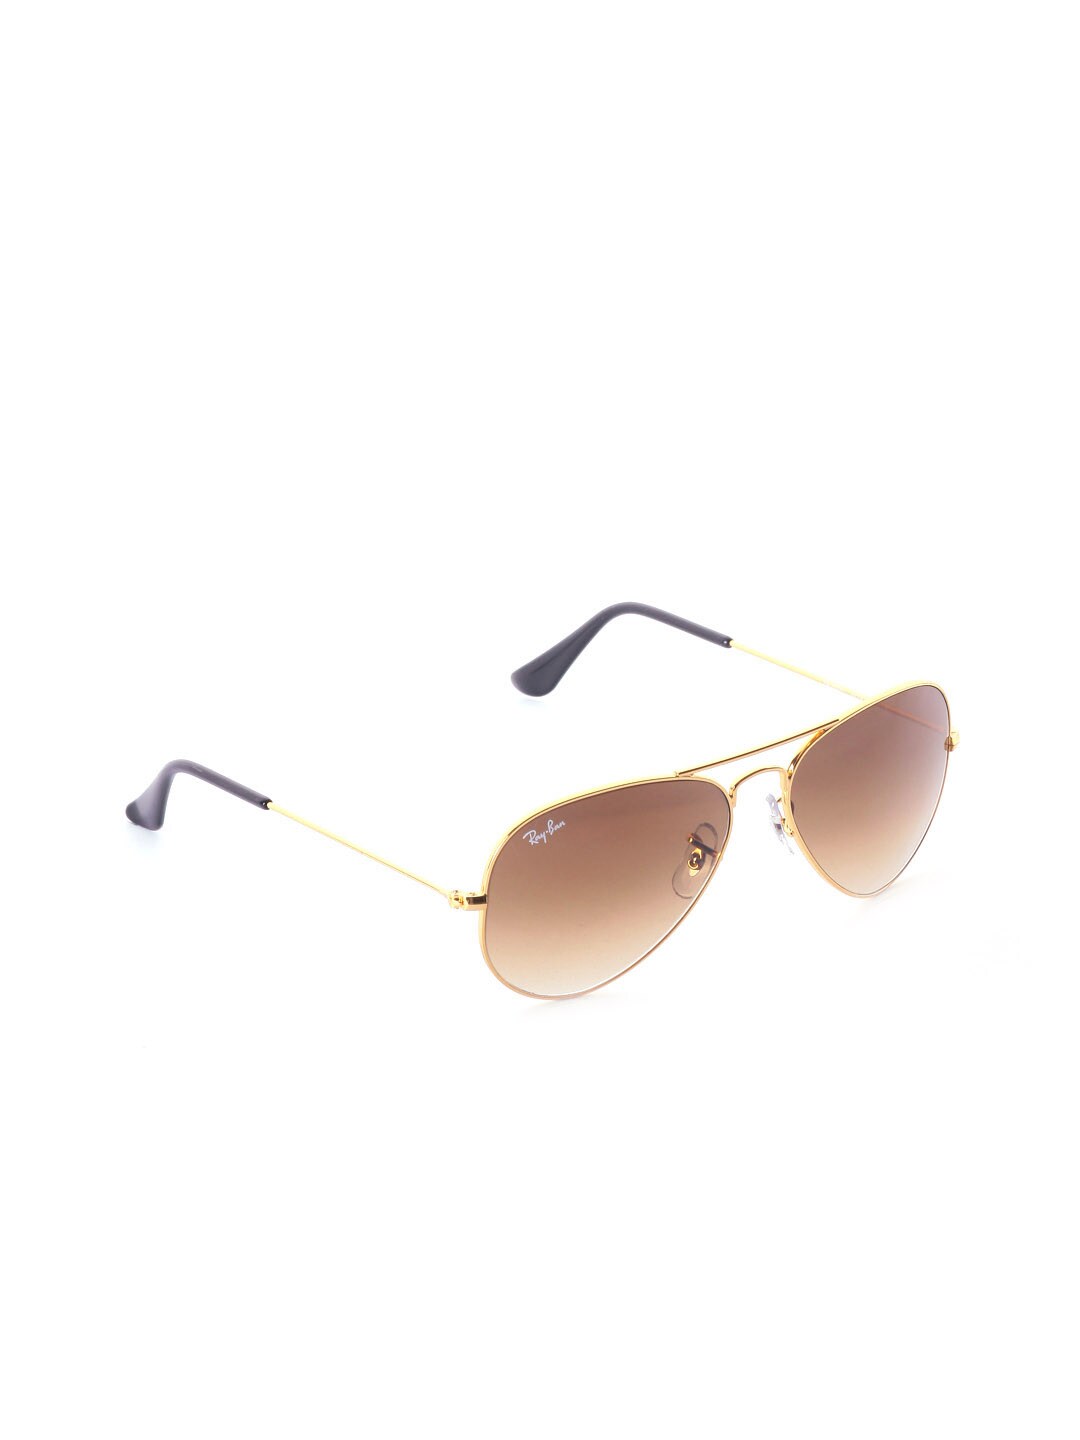 Ray-Ban Men Aviator Gold Sunglasses